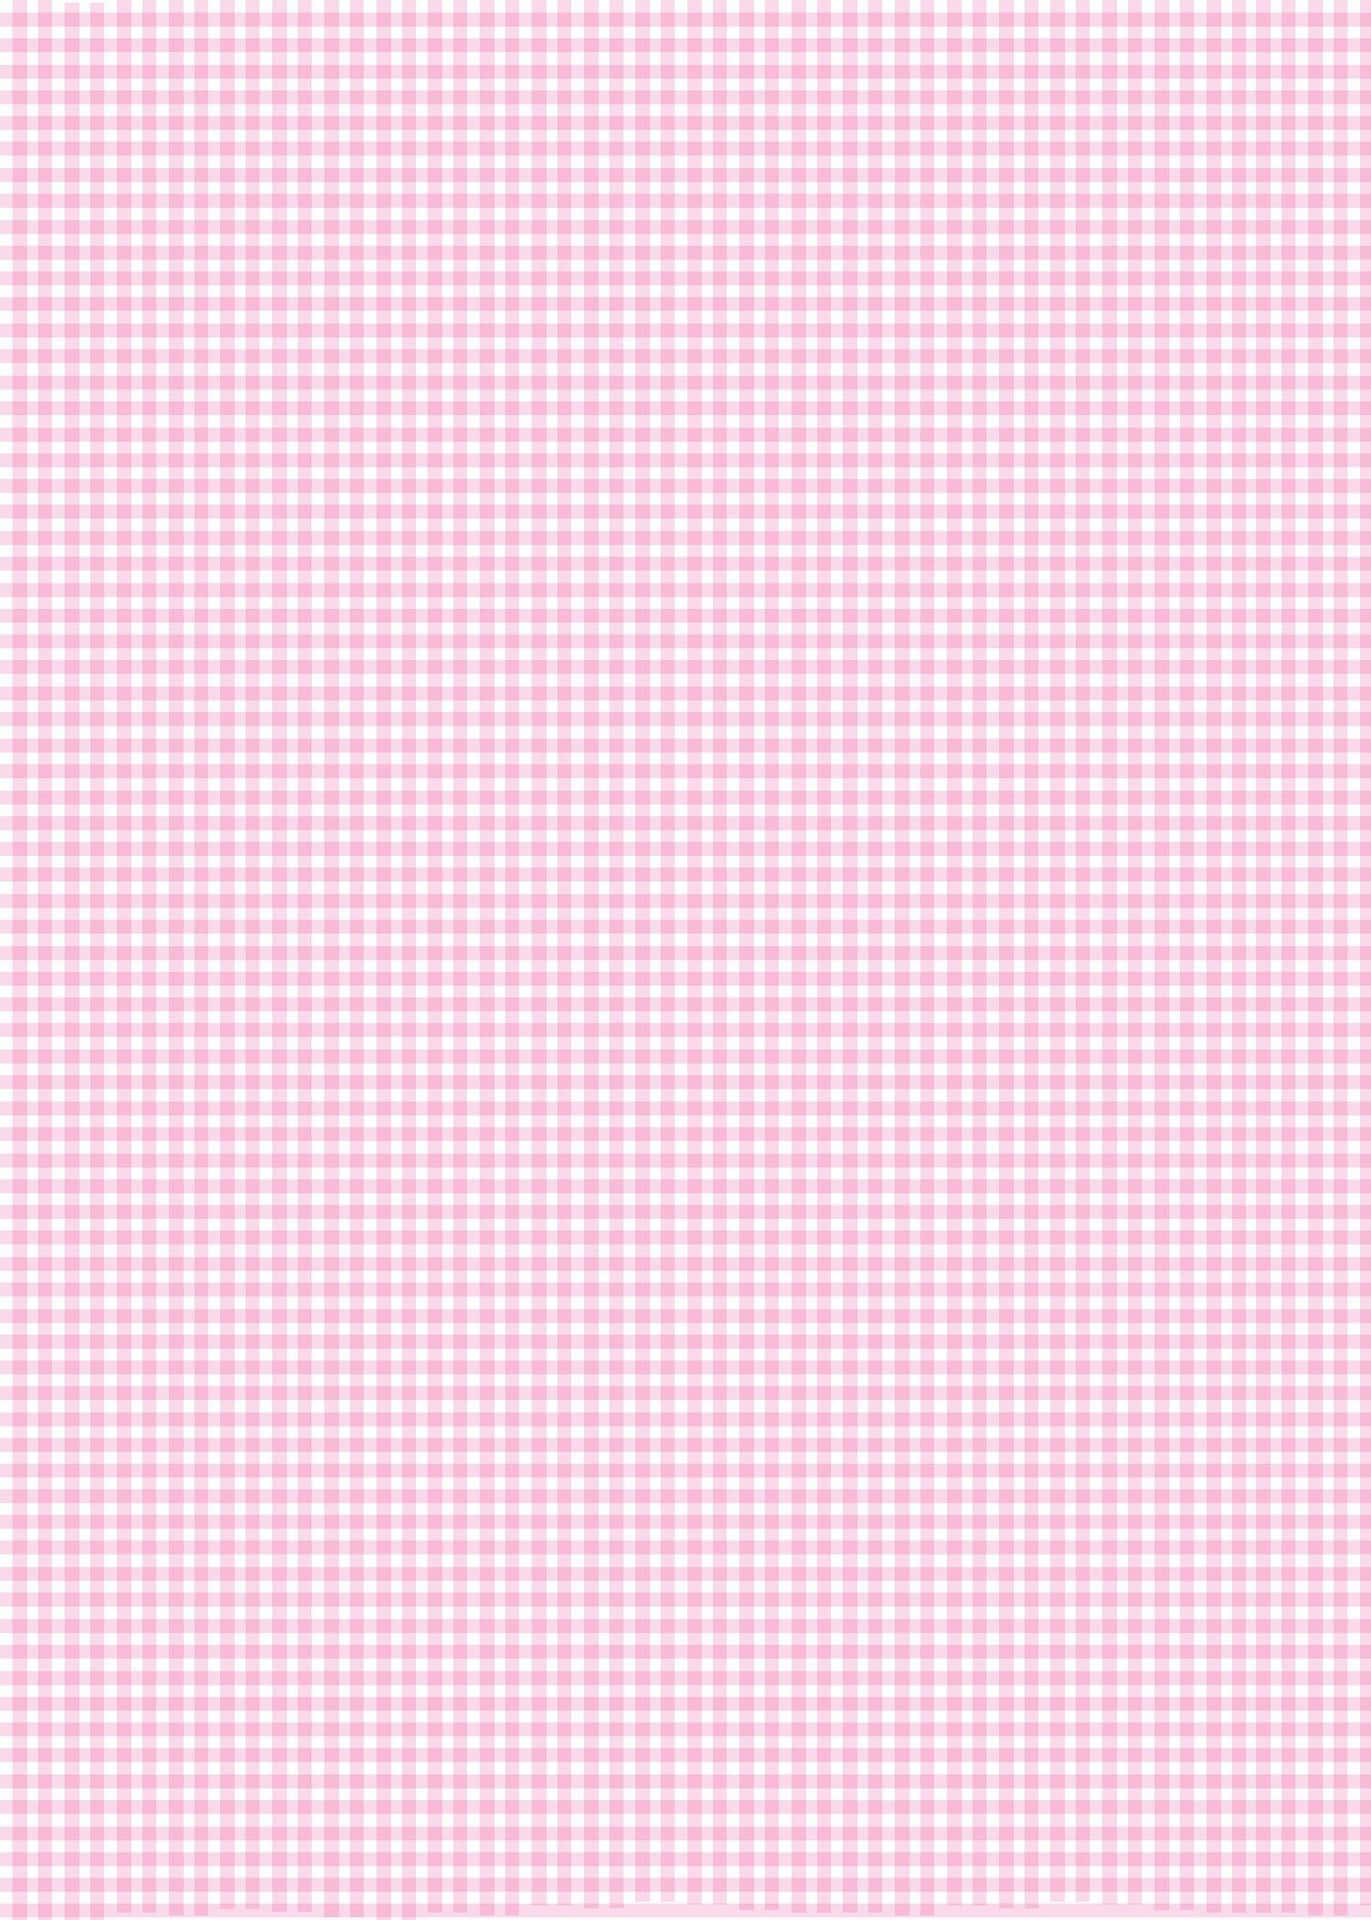 Elegant Pink Checkered Background Wallpaper